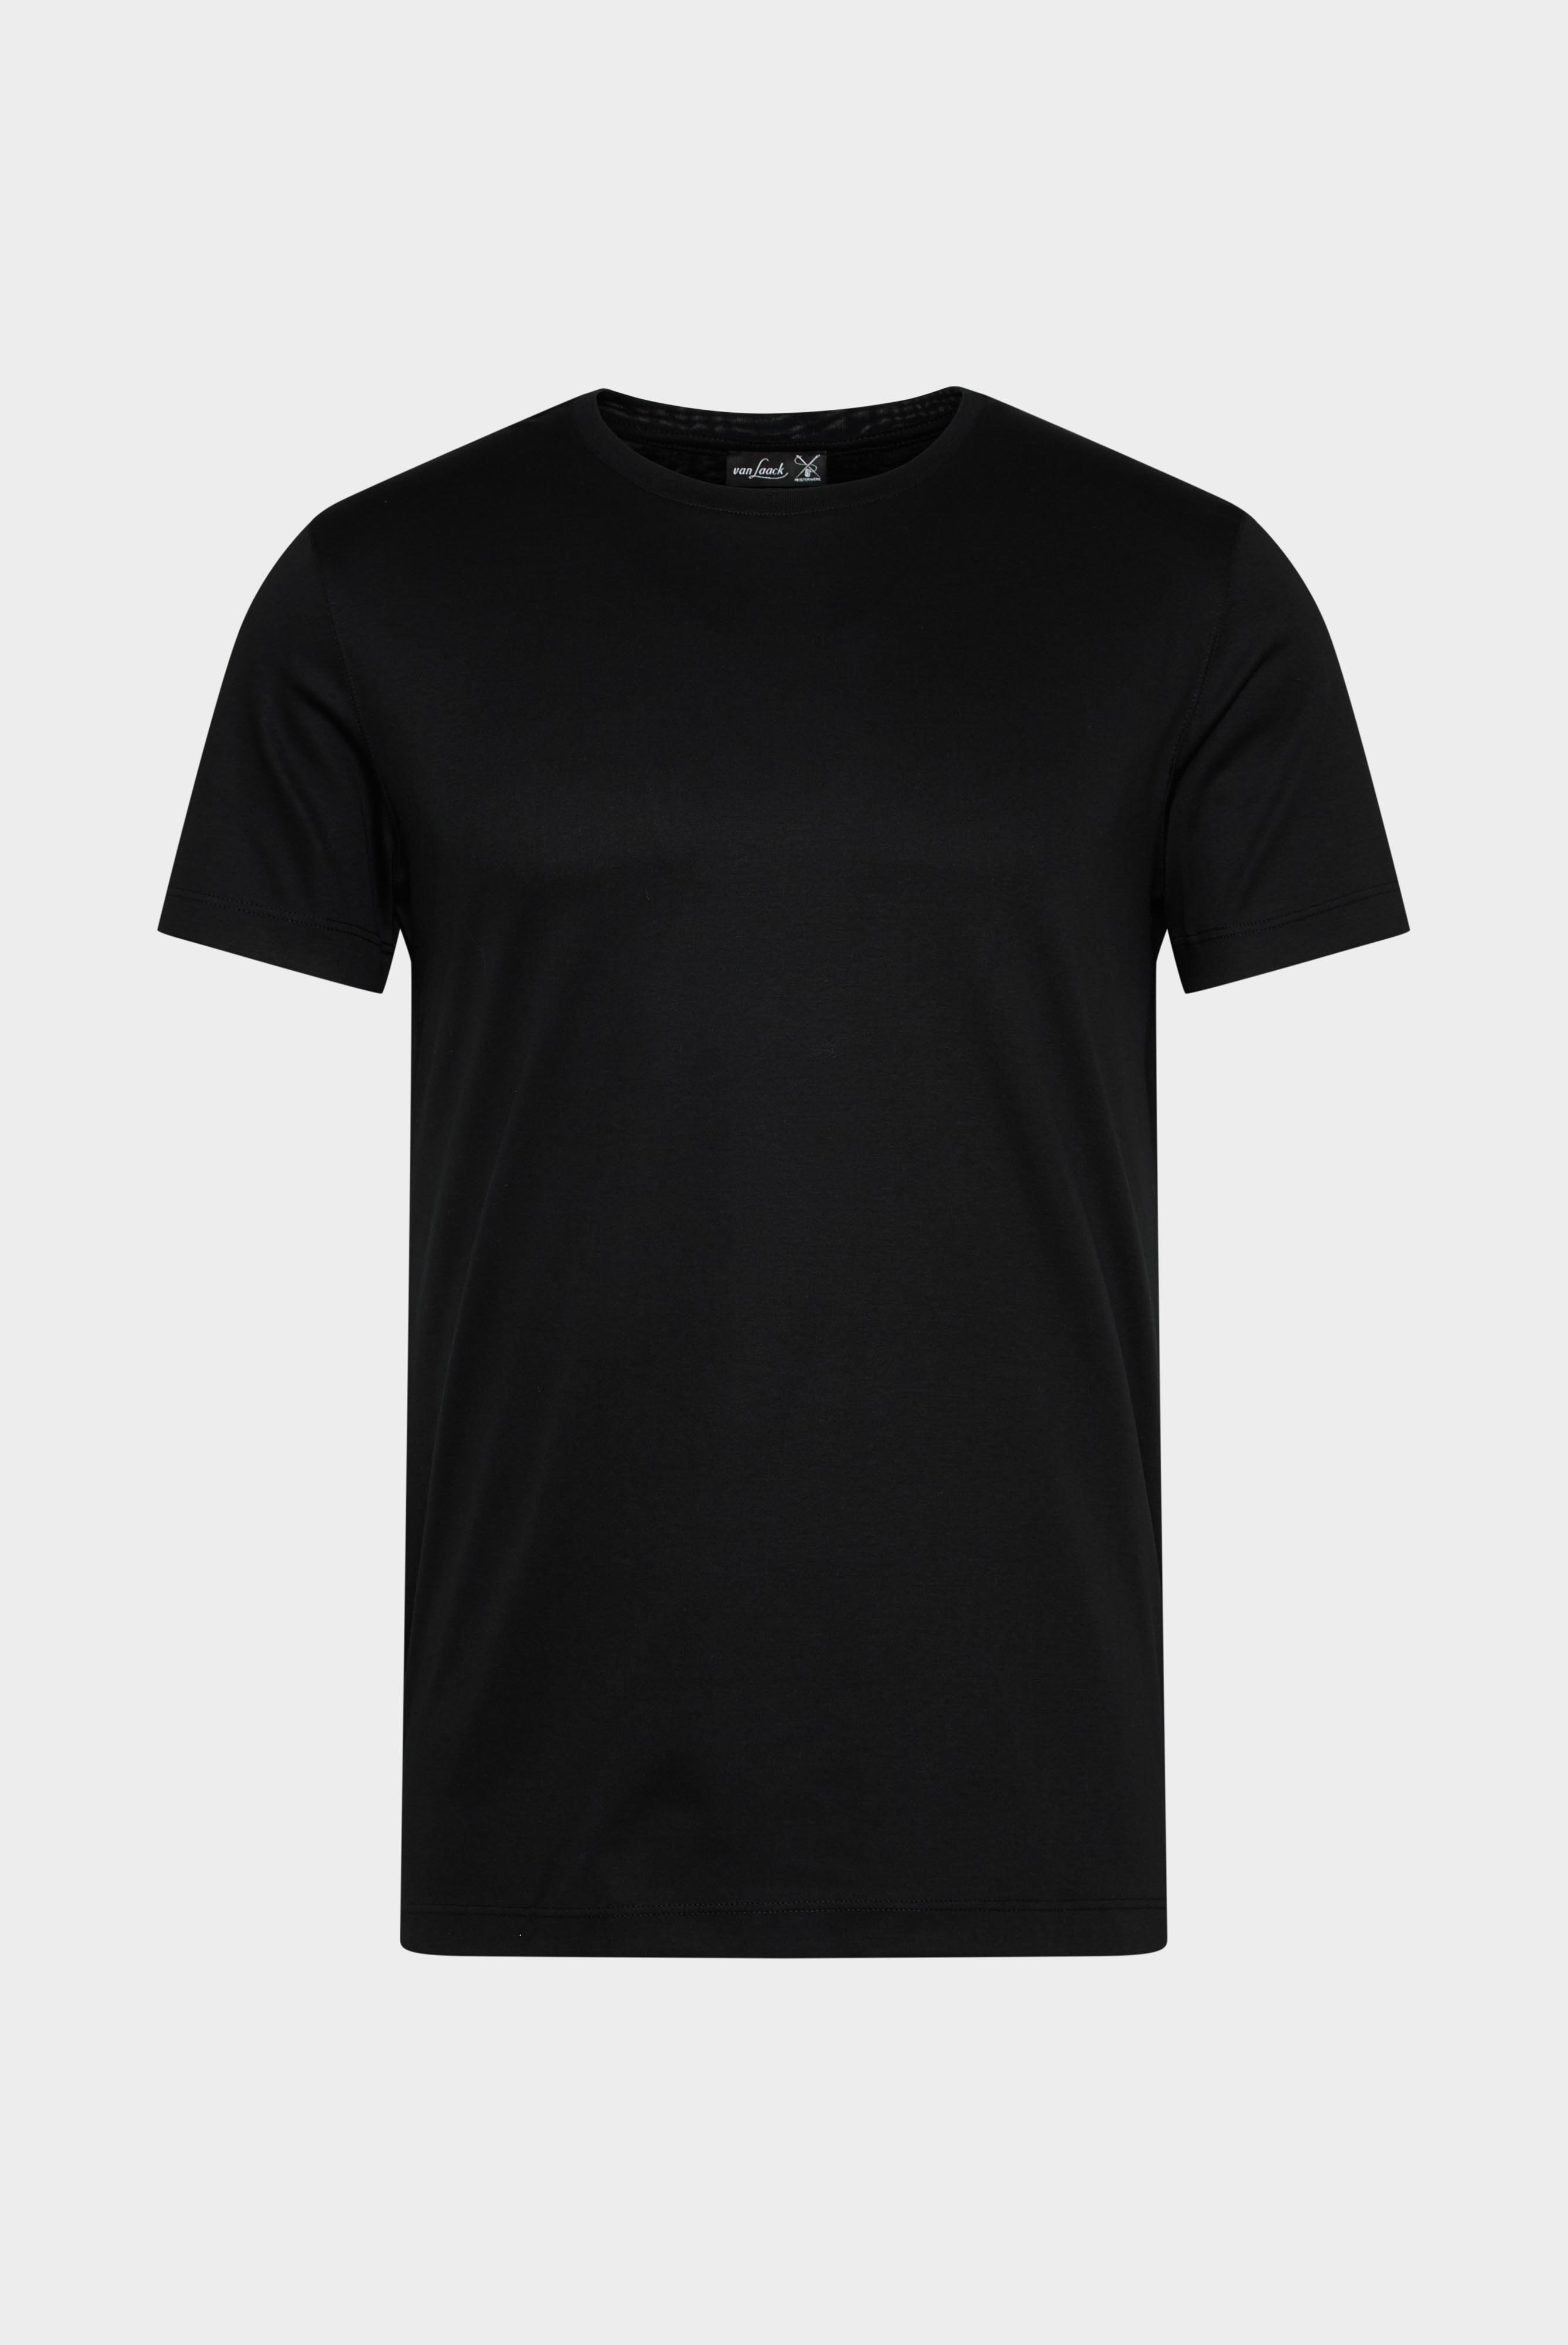 T-Shirts+Swiss Cotton Jersey Crew Neck T-Shirt+20.1717.UX.180031.099.S